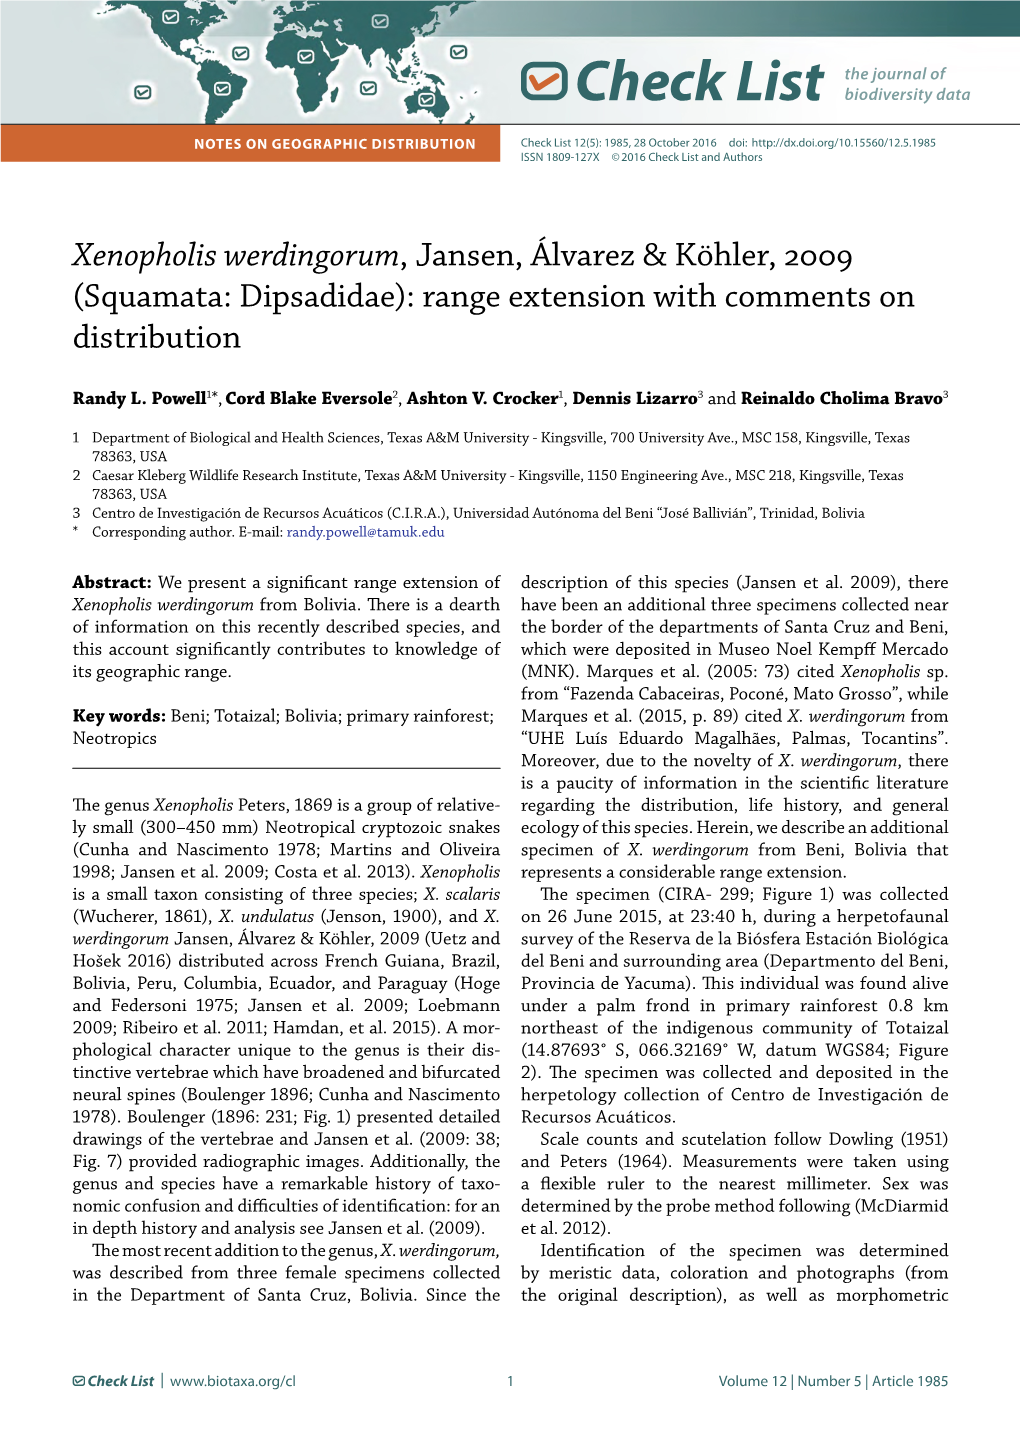 Xenopholis Werdingorum, Jansen, Álvarez & Köhler, 2009 (Squamata: Dipsadidae): Range Extension with Comments on Distribution